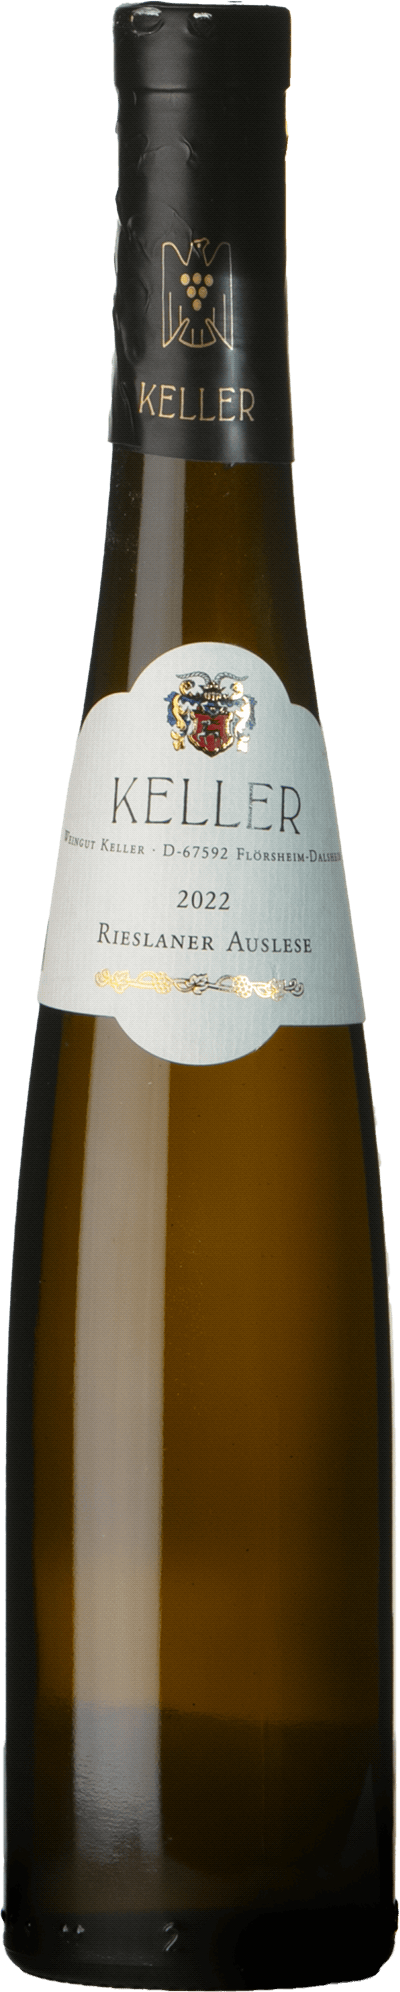 Weingut Keller Rieslaner Auslese, 2022